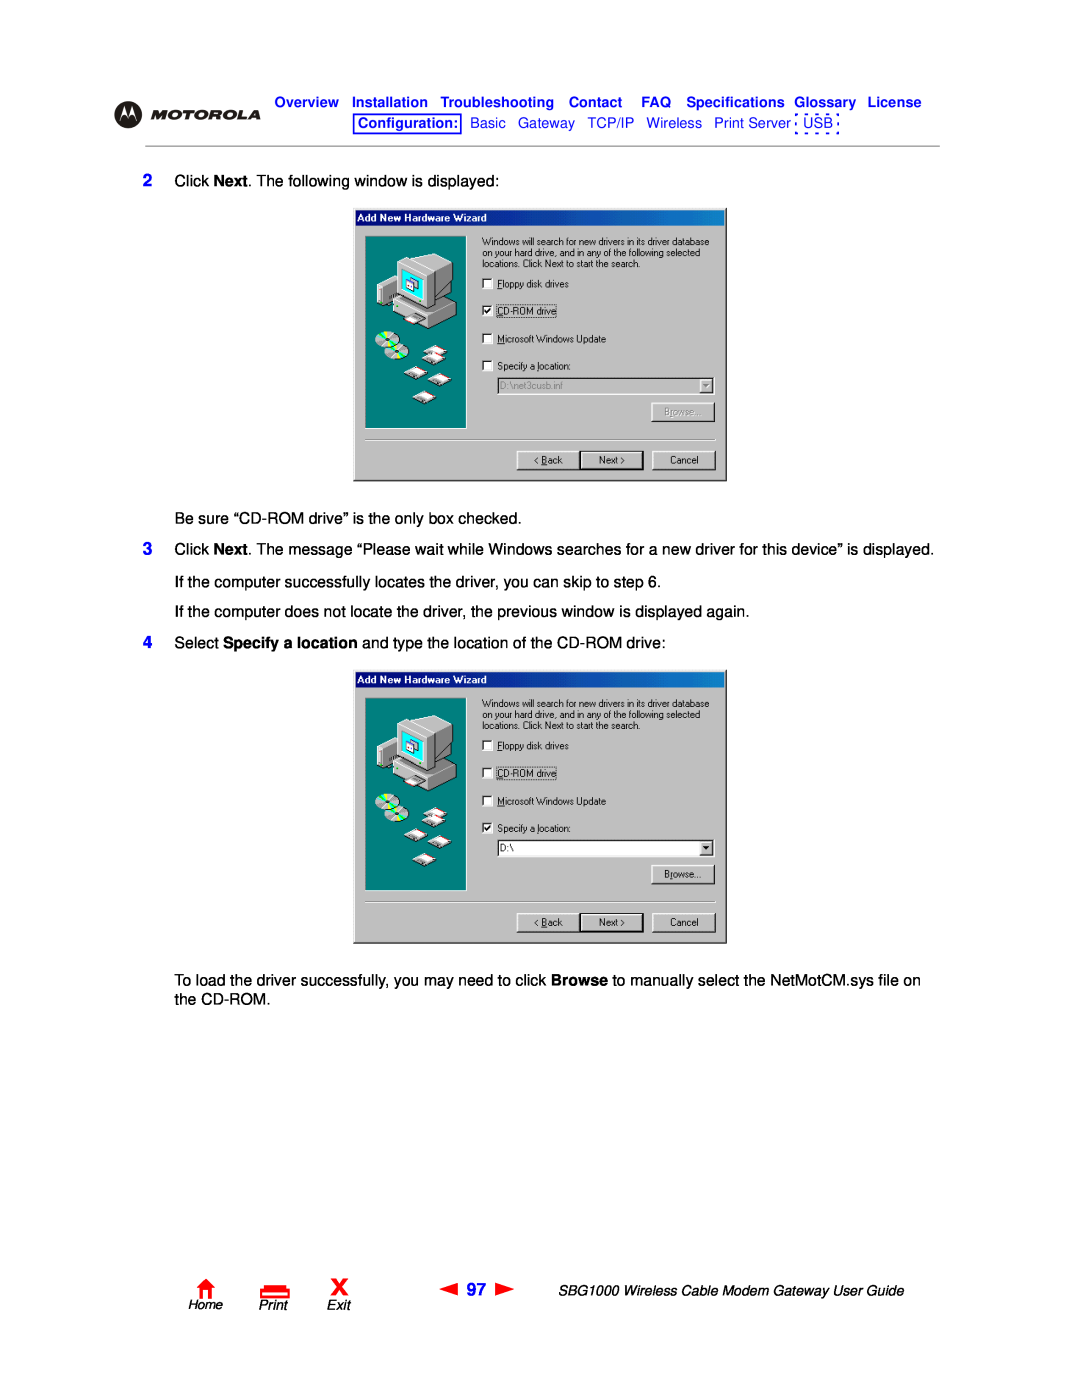 Motorola SBG1000 manual Click Next. The following window is displayed 